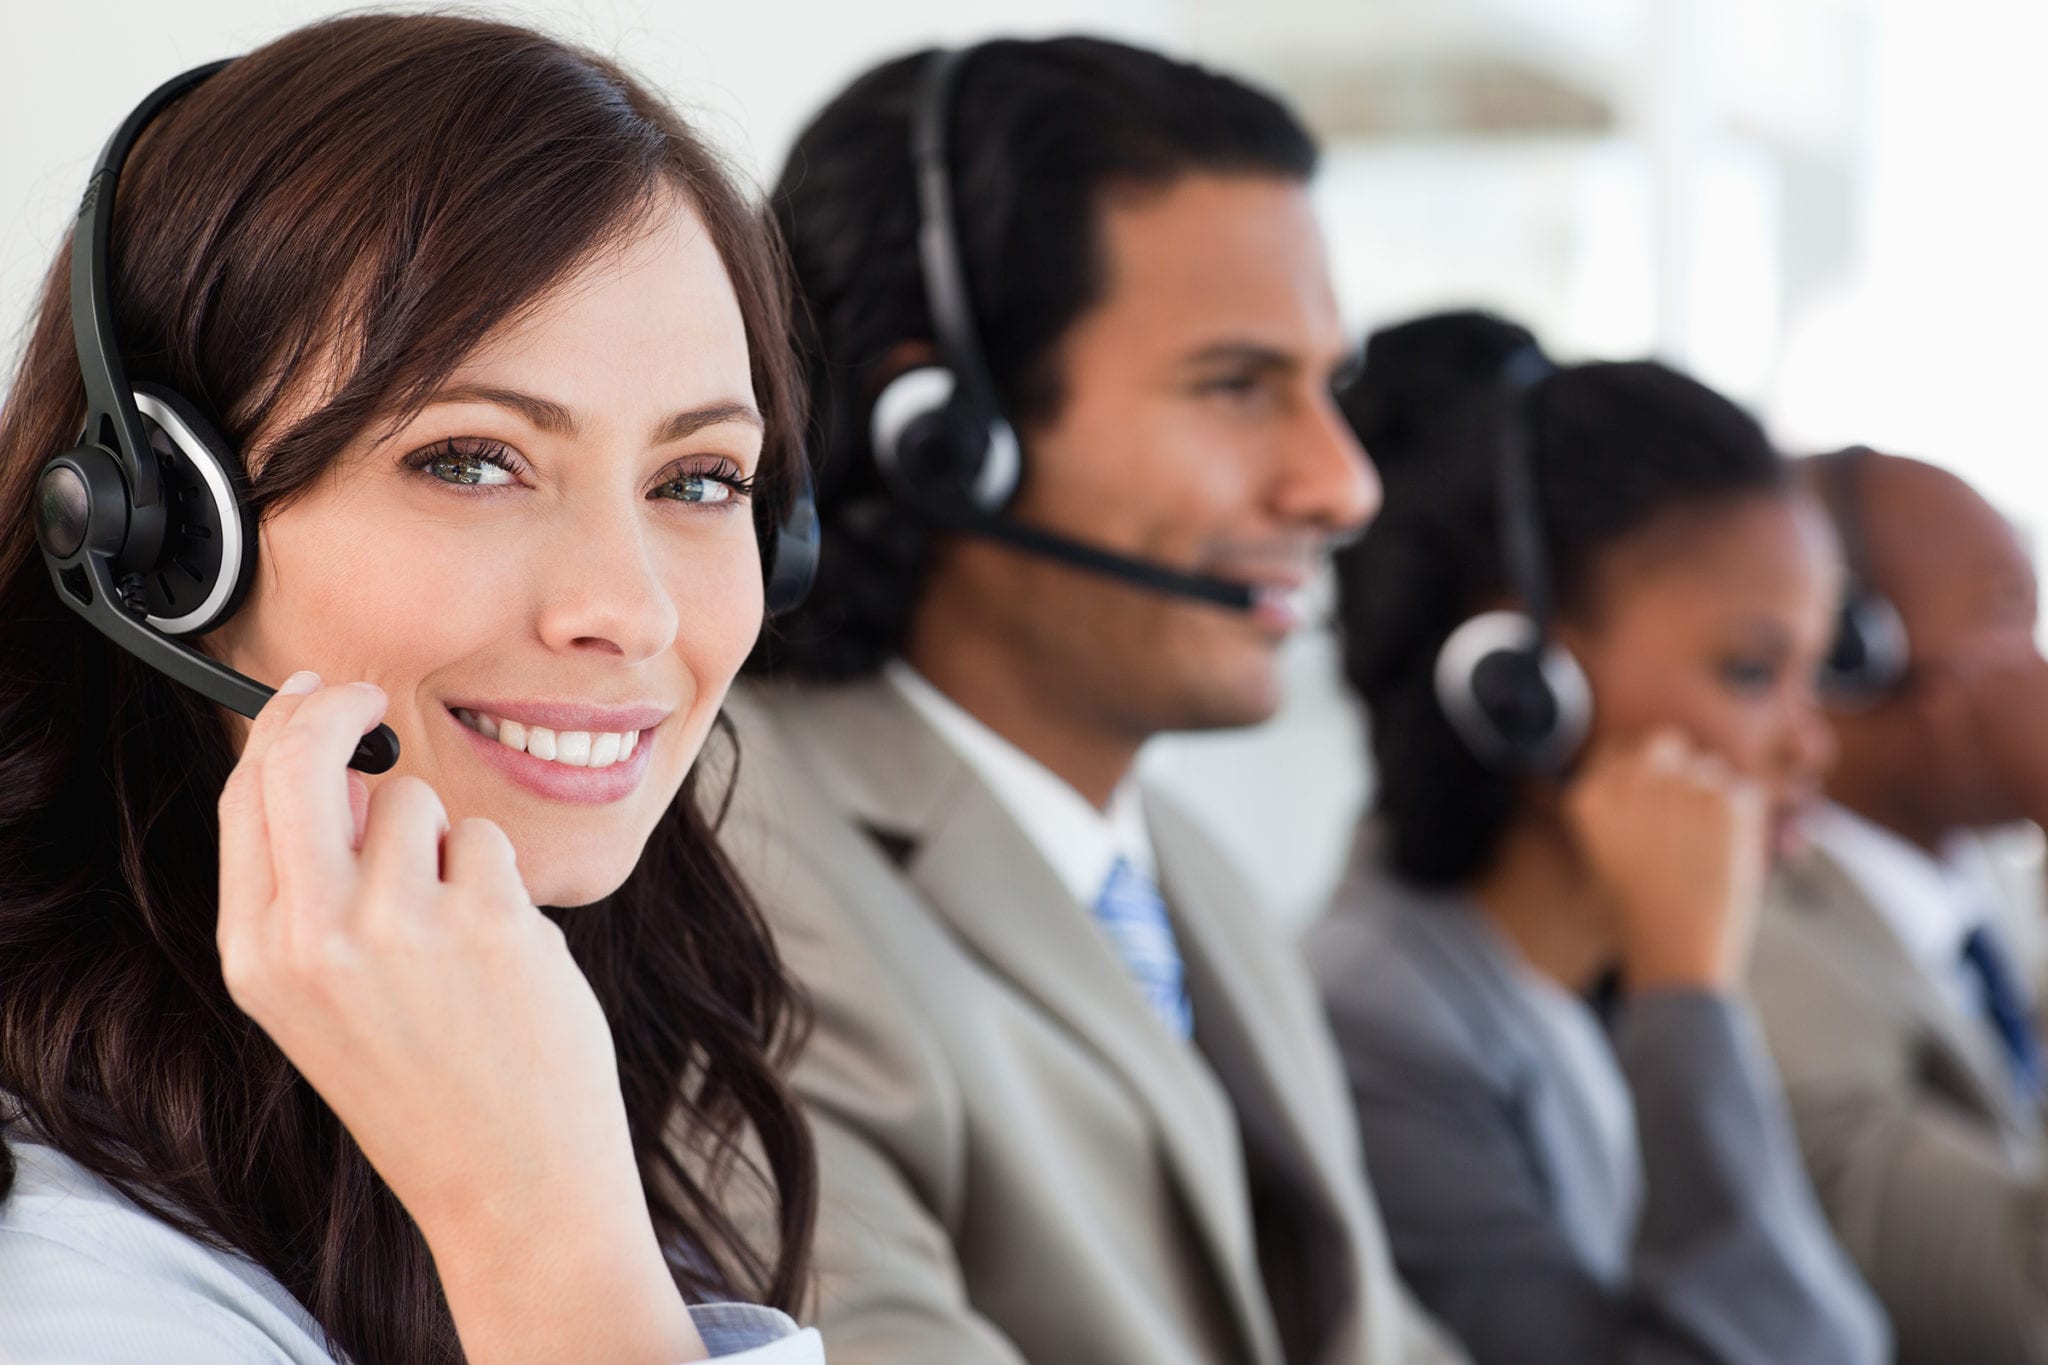 Telephonic Calls for B2B Sales